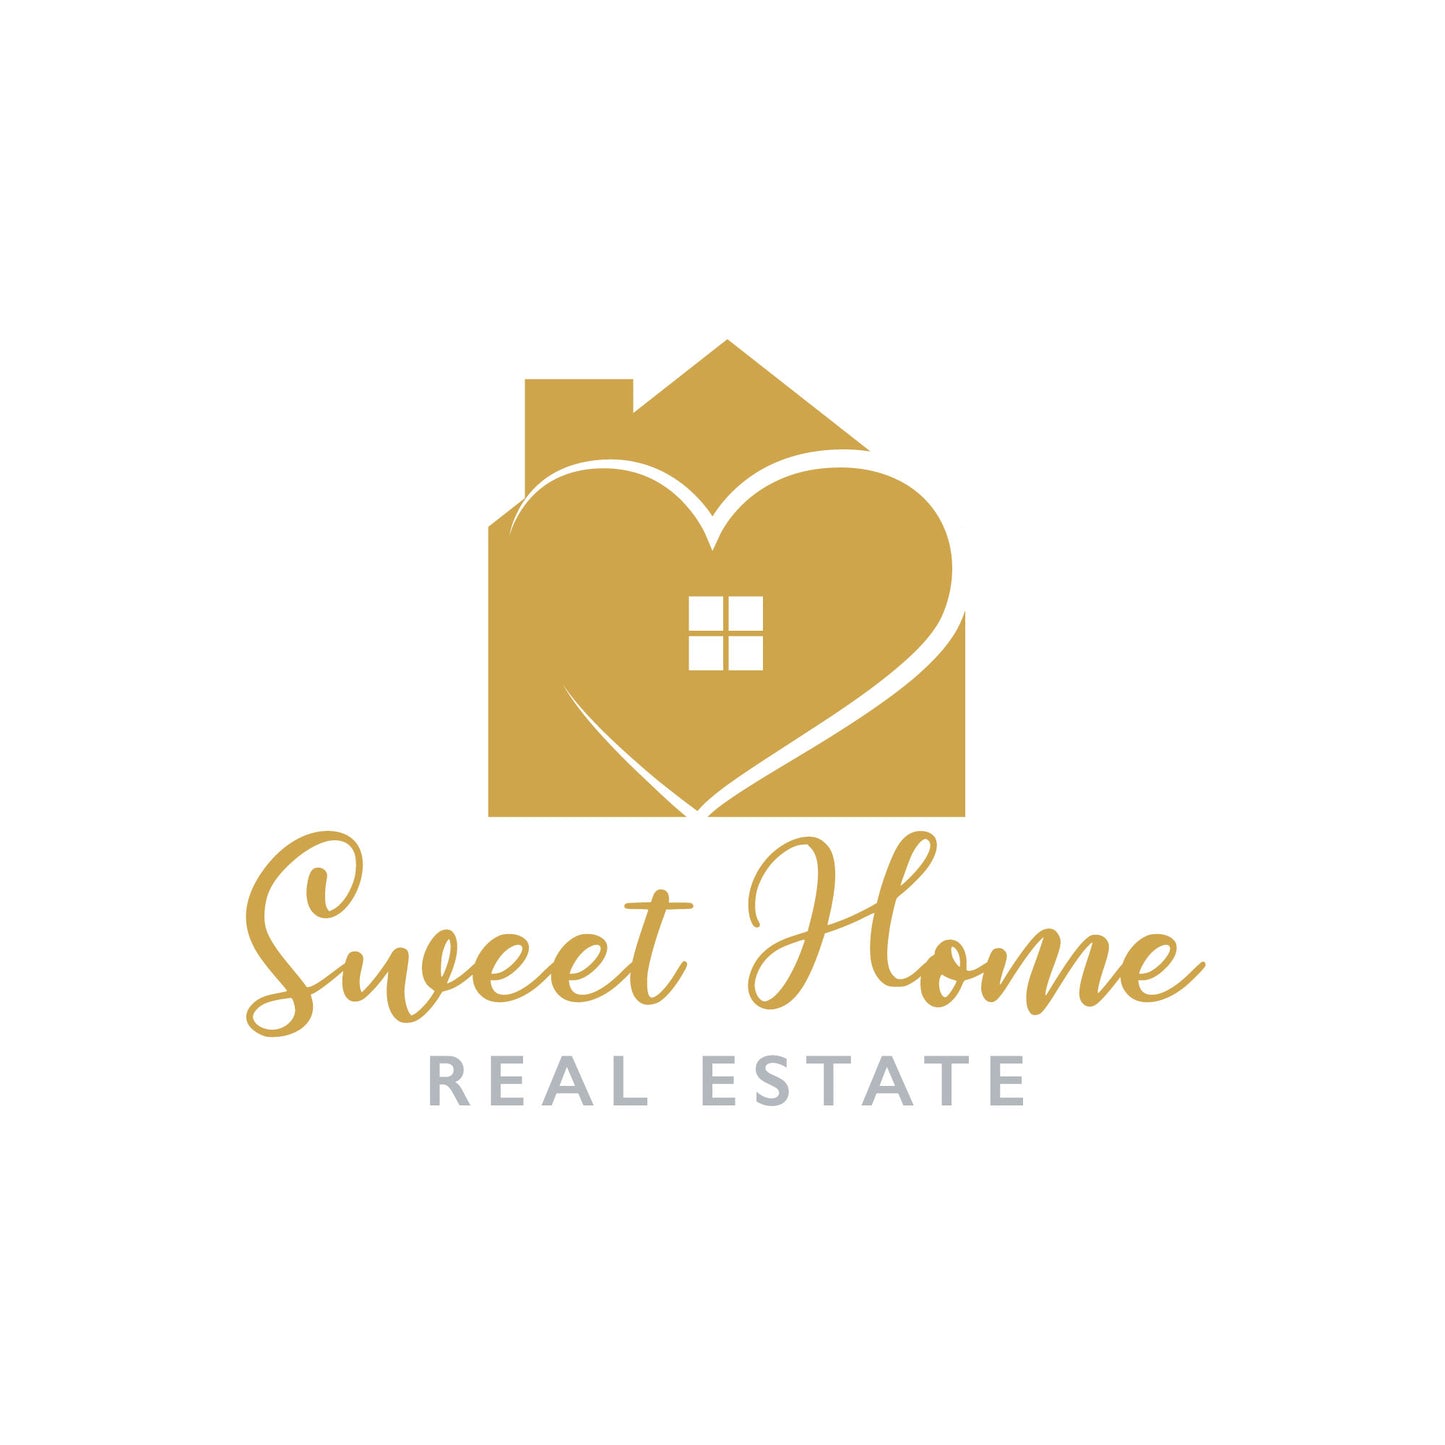 Real Estate Logo | Realtor Logo | Realty Logo | Property Management | Real Estate Business | Real Estate Company | Realtor Branding